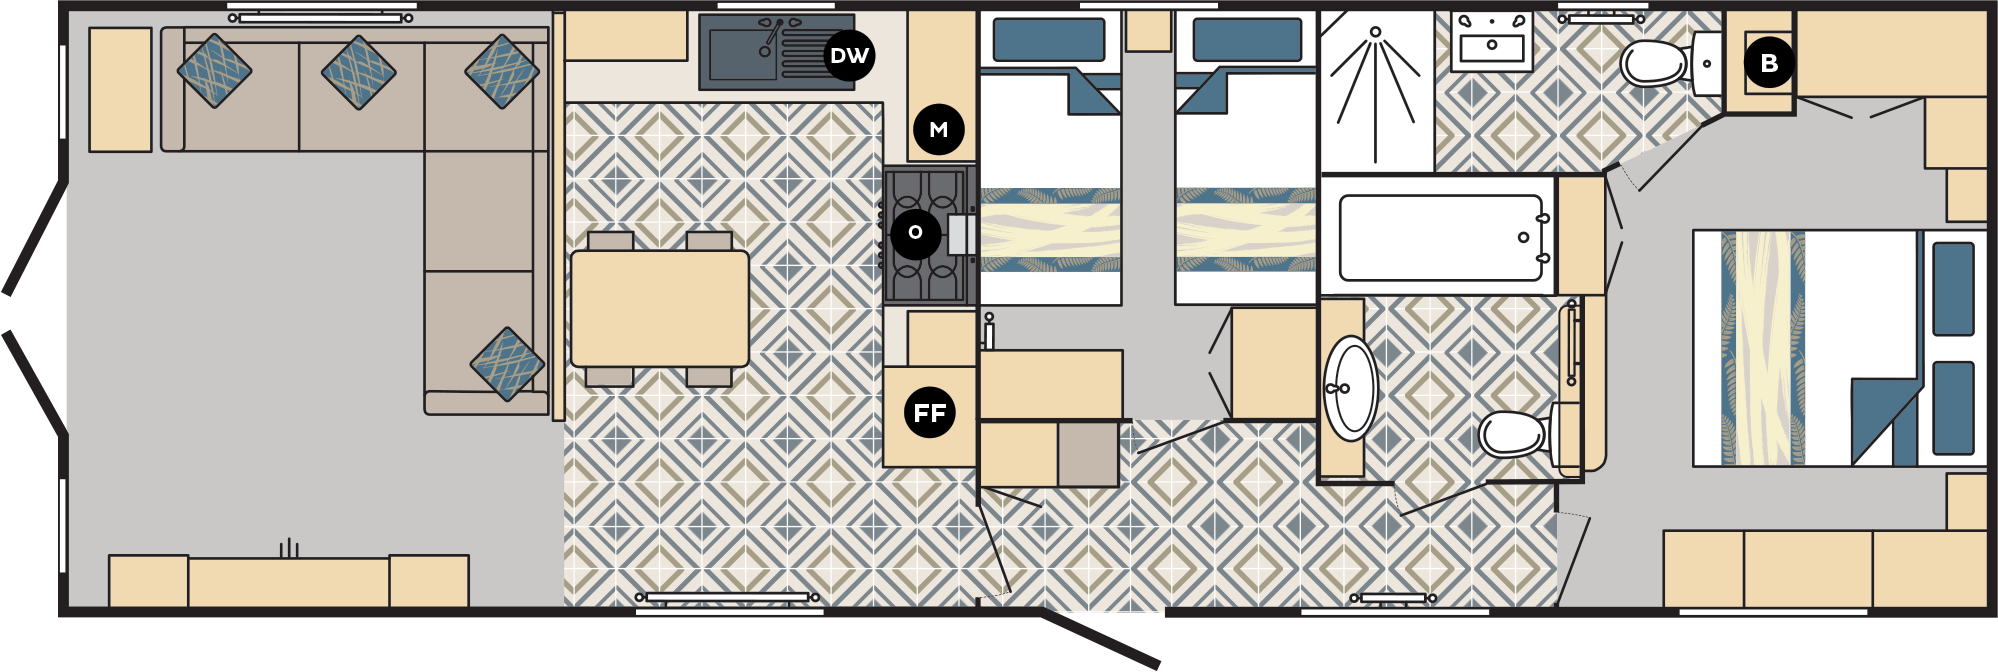 Carnaby Chantry Lodge 41x13 2 bedroom with bath static caravan mobile home floorplan